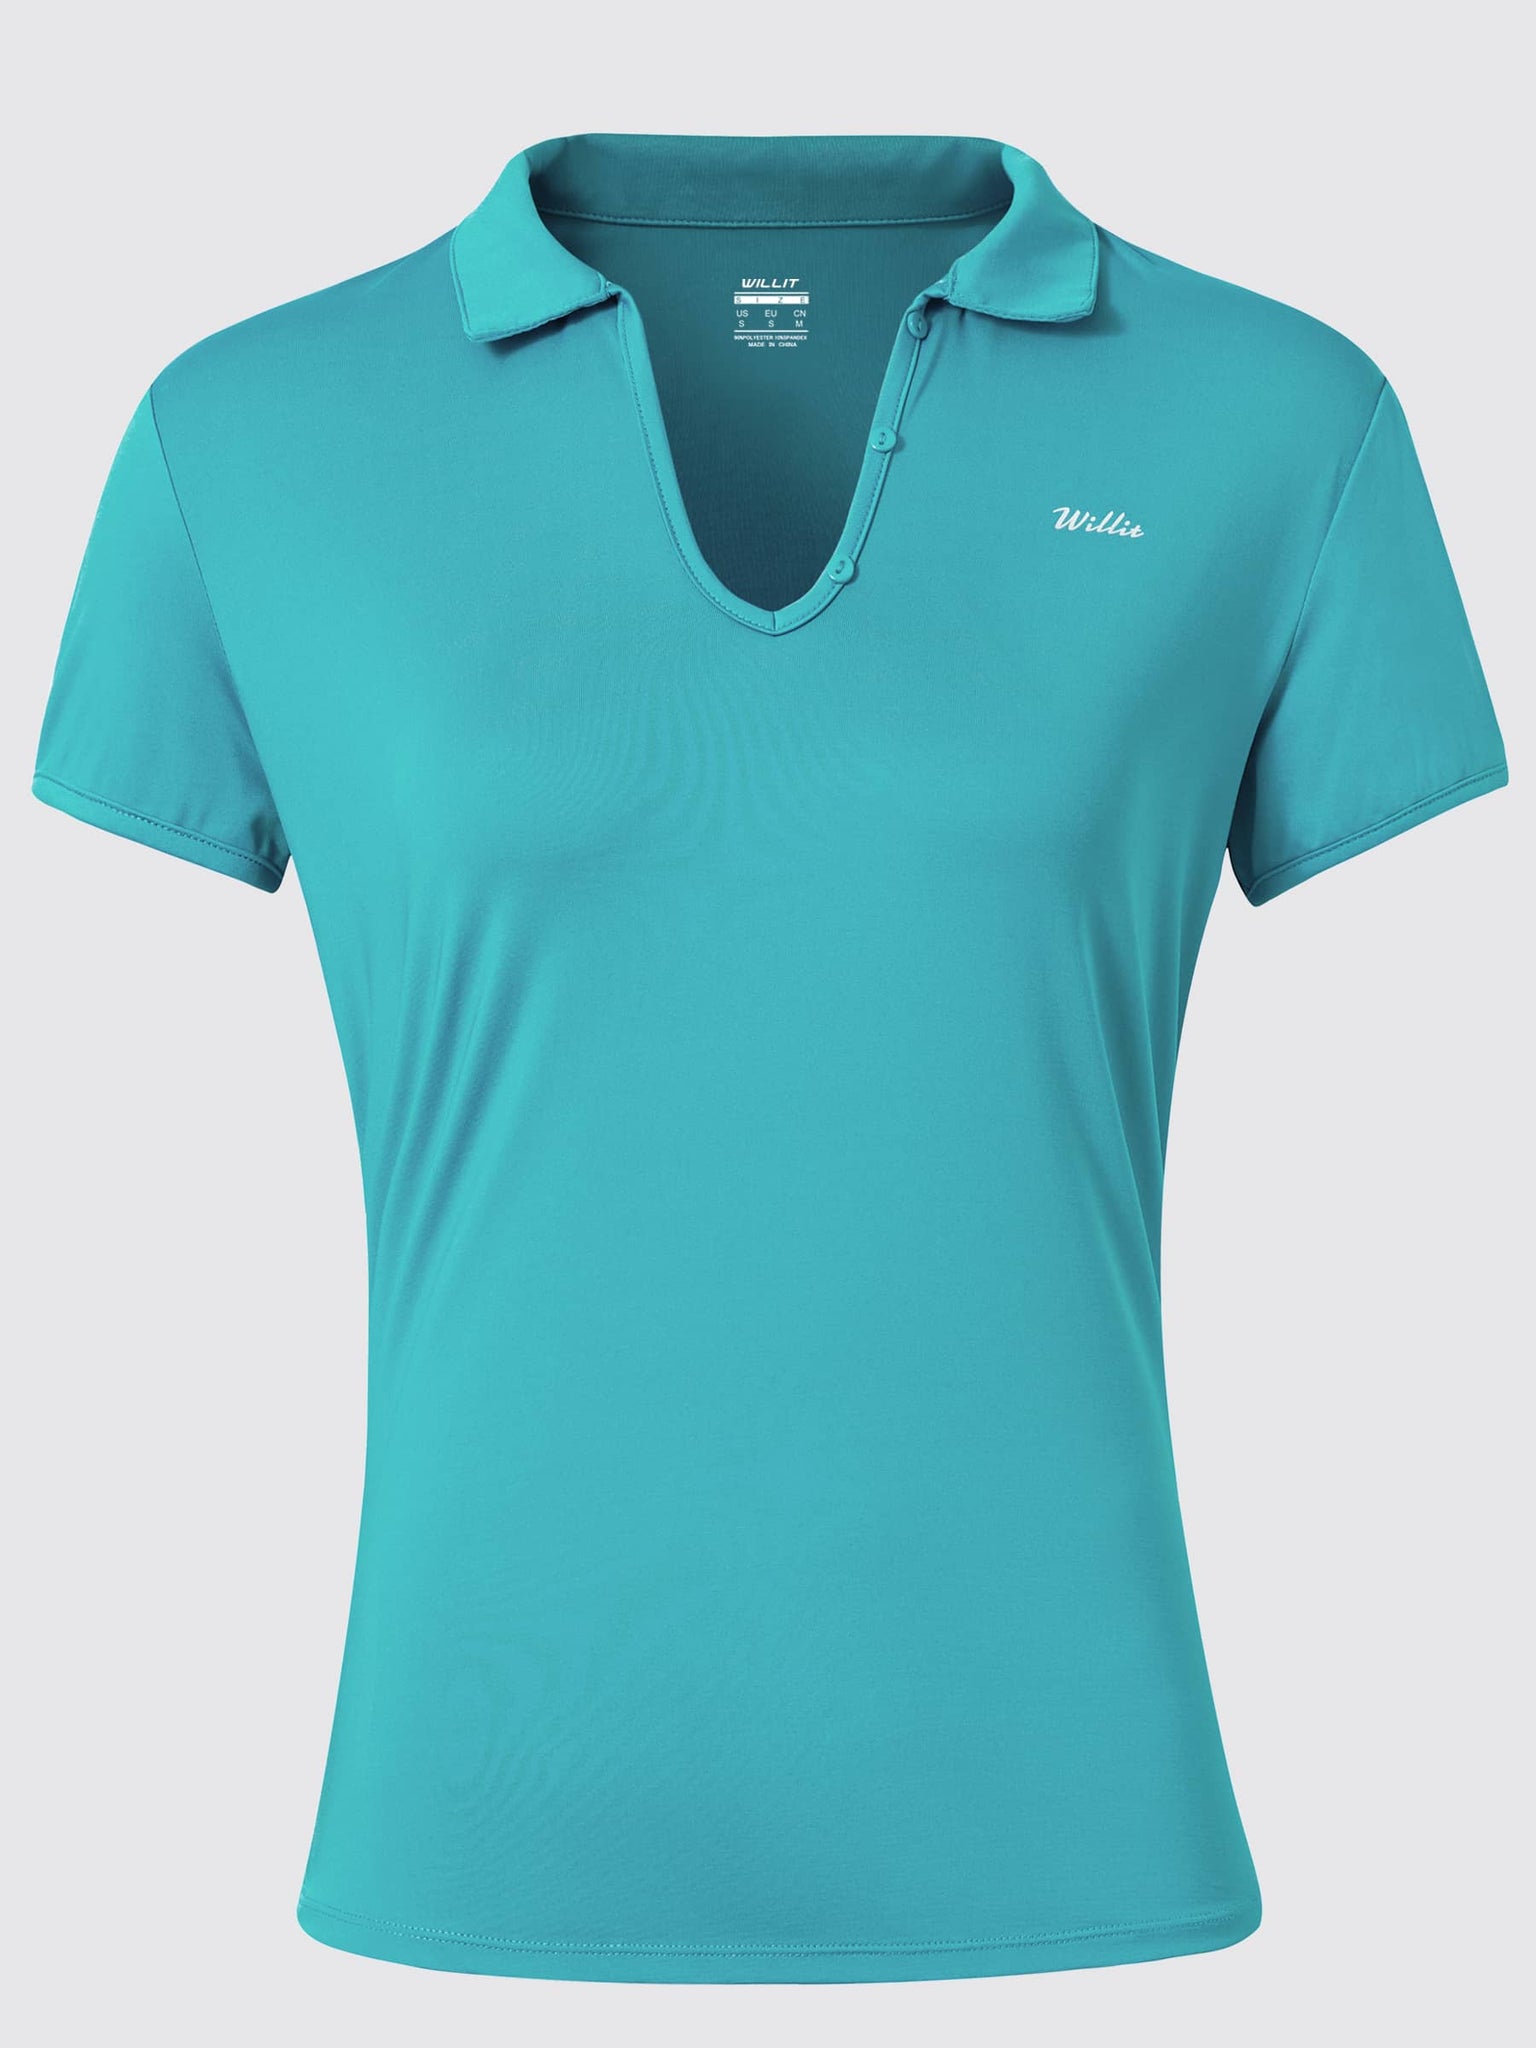 Willit Women's Golf Polo Short Sleeve Shirts_Aqua1